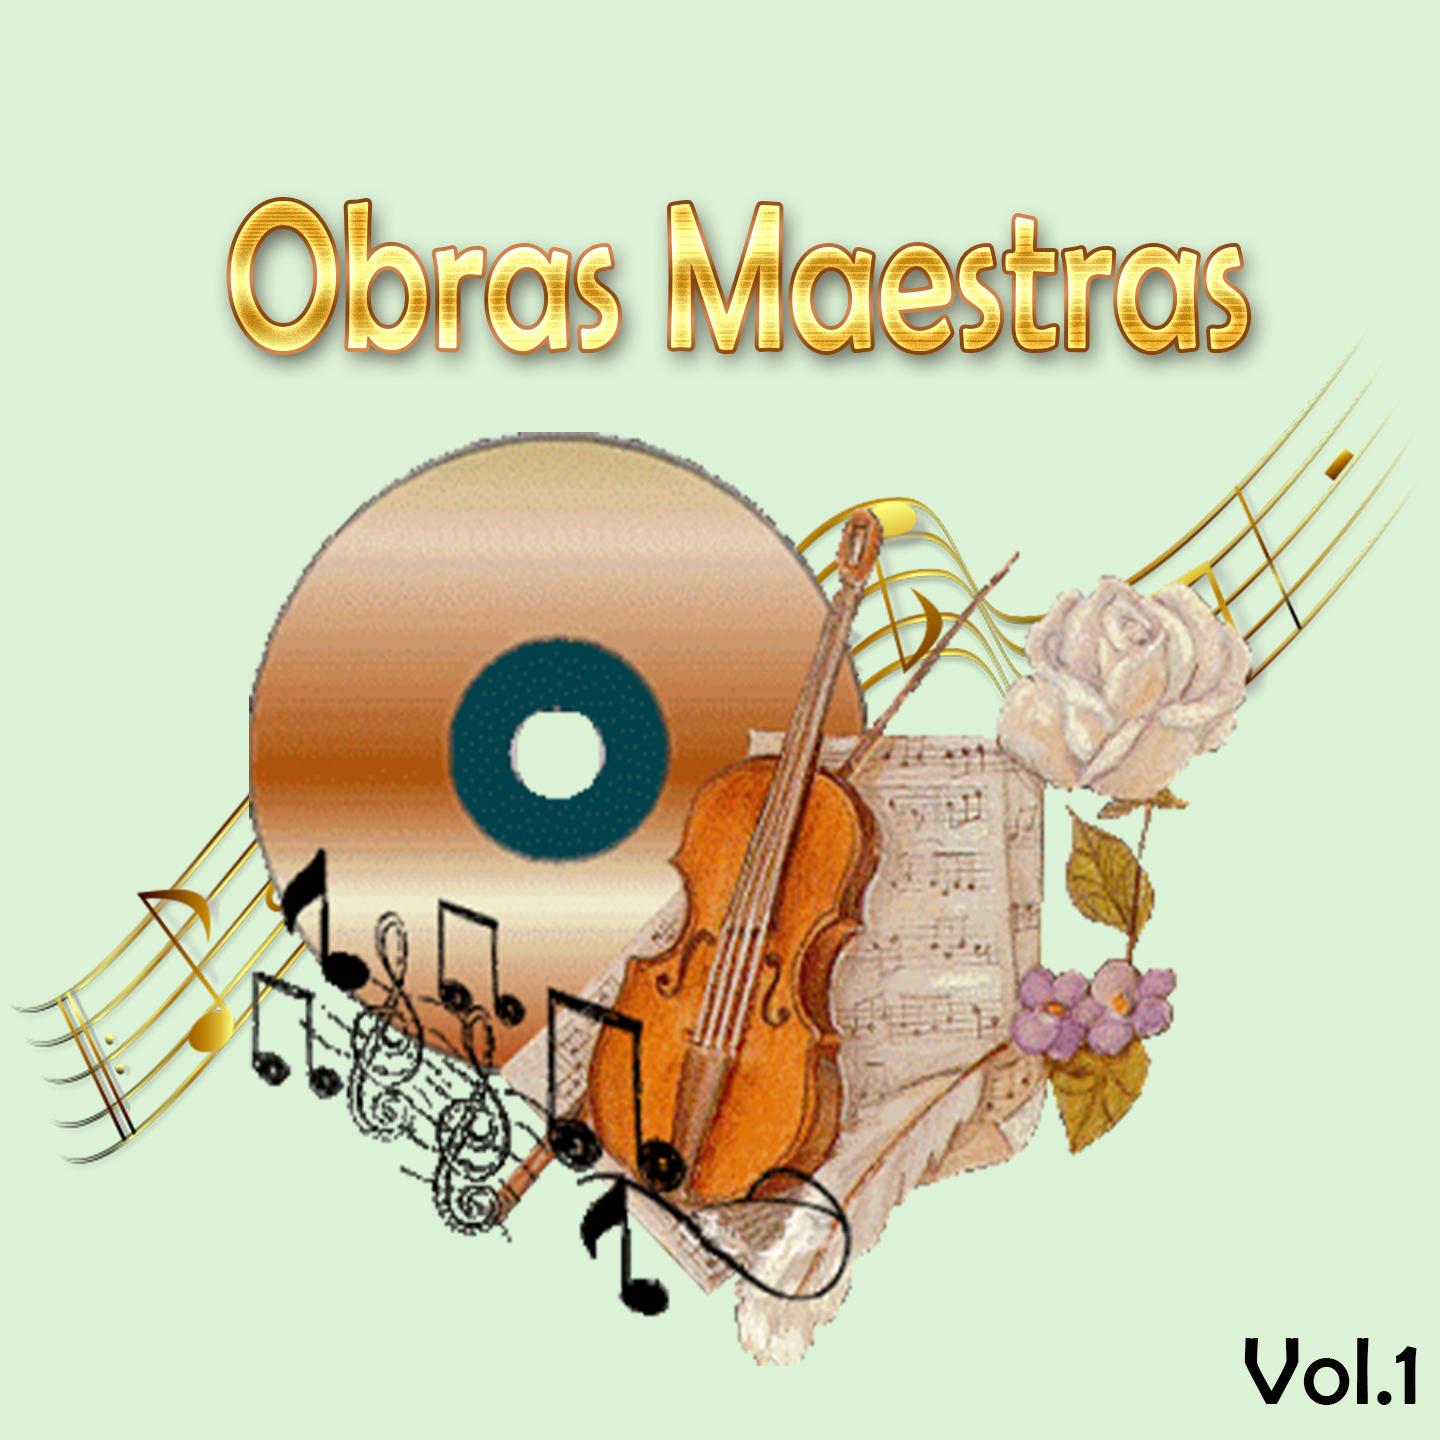 Quatuor a cordes in G Minor, Op. 10: II. Assez vif et bien rythme